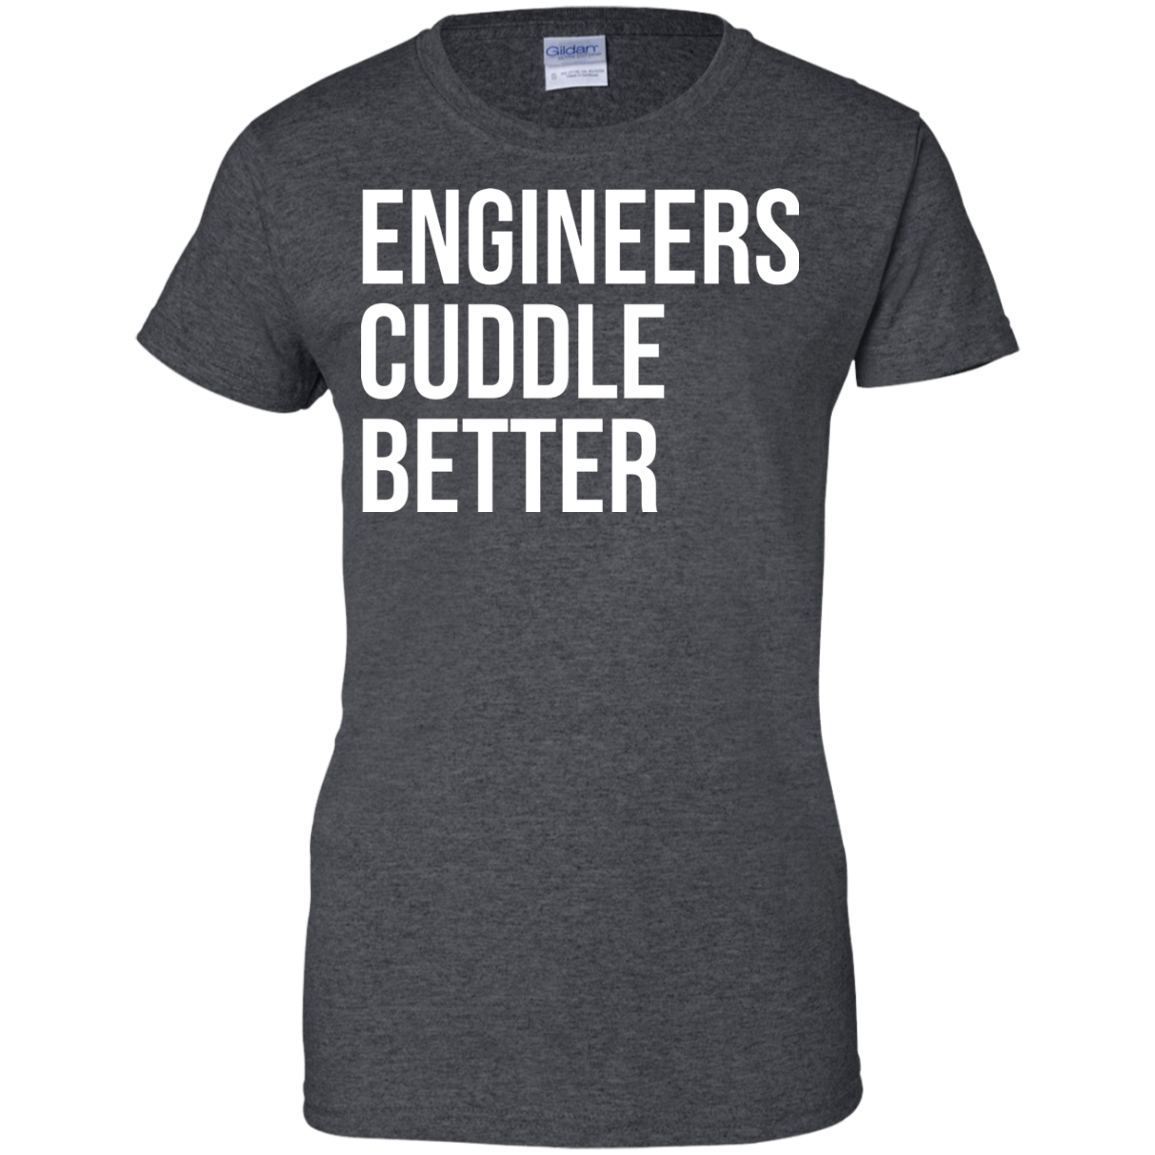 Los ingenieros se abrazan mejor